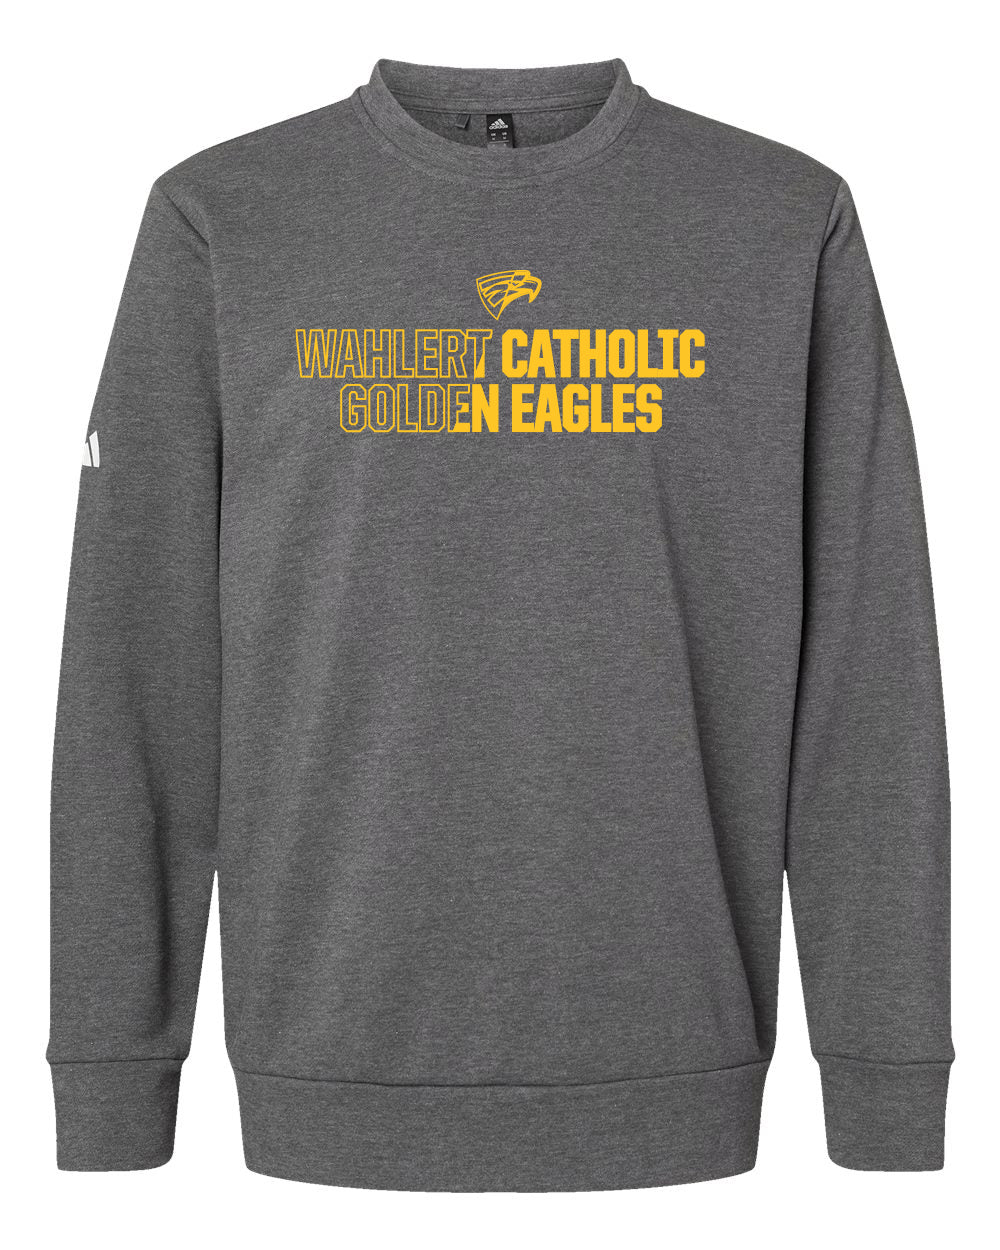 A434 - WAHLERT CATHOLIC 2 TONED SPIRIT - Adult Adidas Fleece Crewneck Sweatshirt